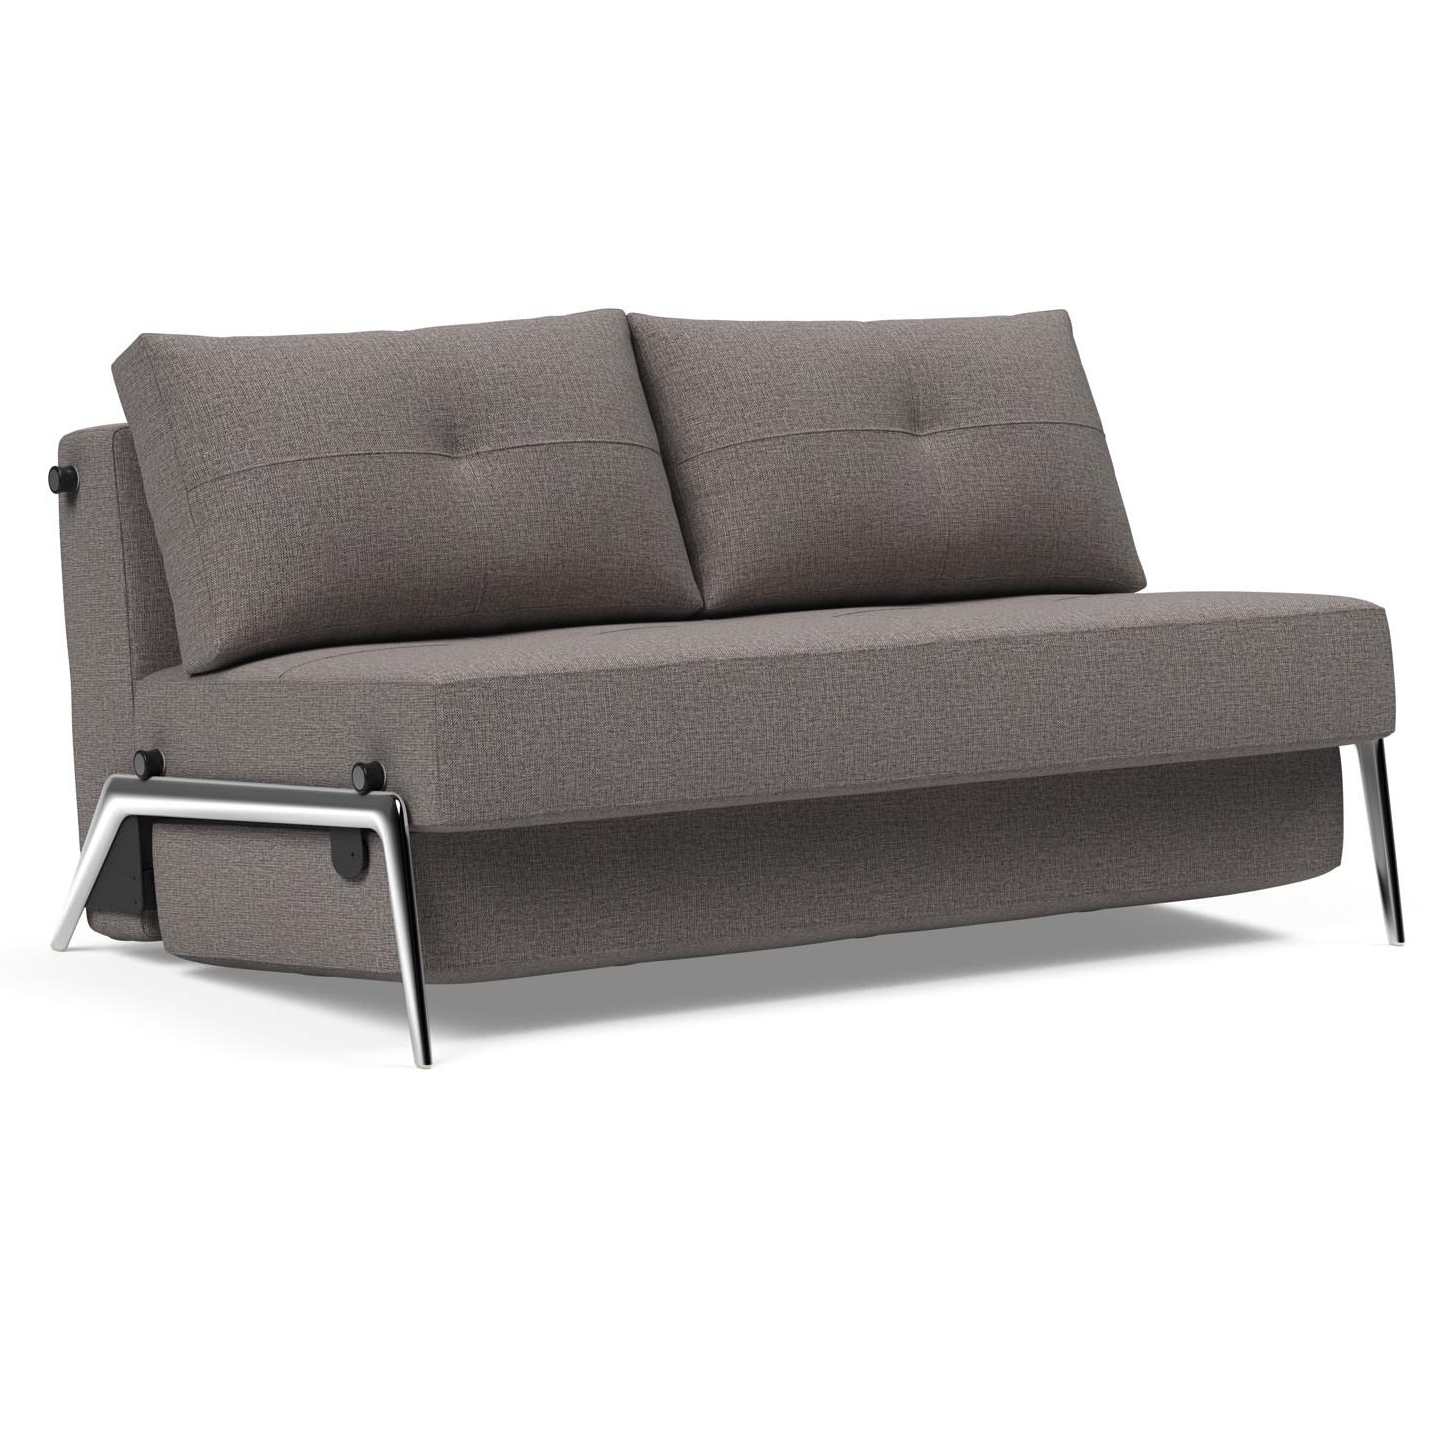 Cubed Full Size Sofa Bed With Aluminum Legs